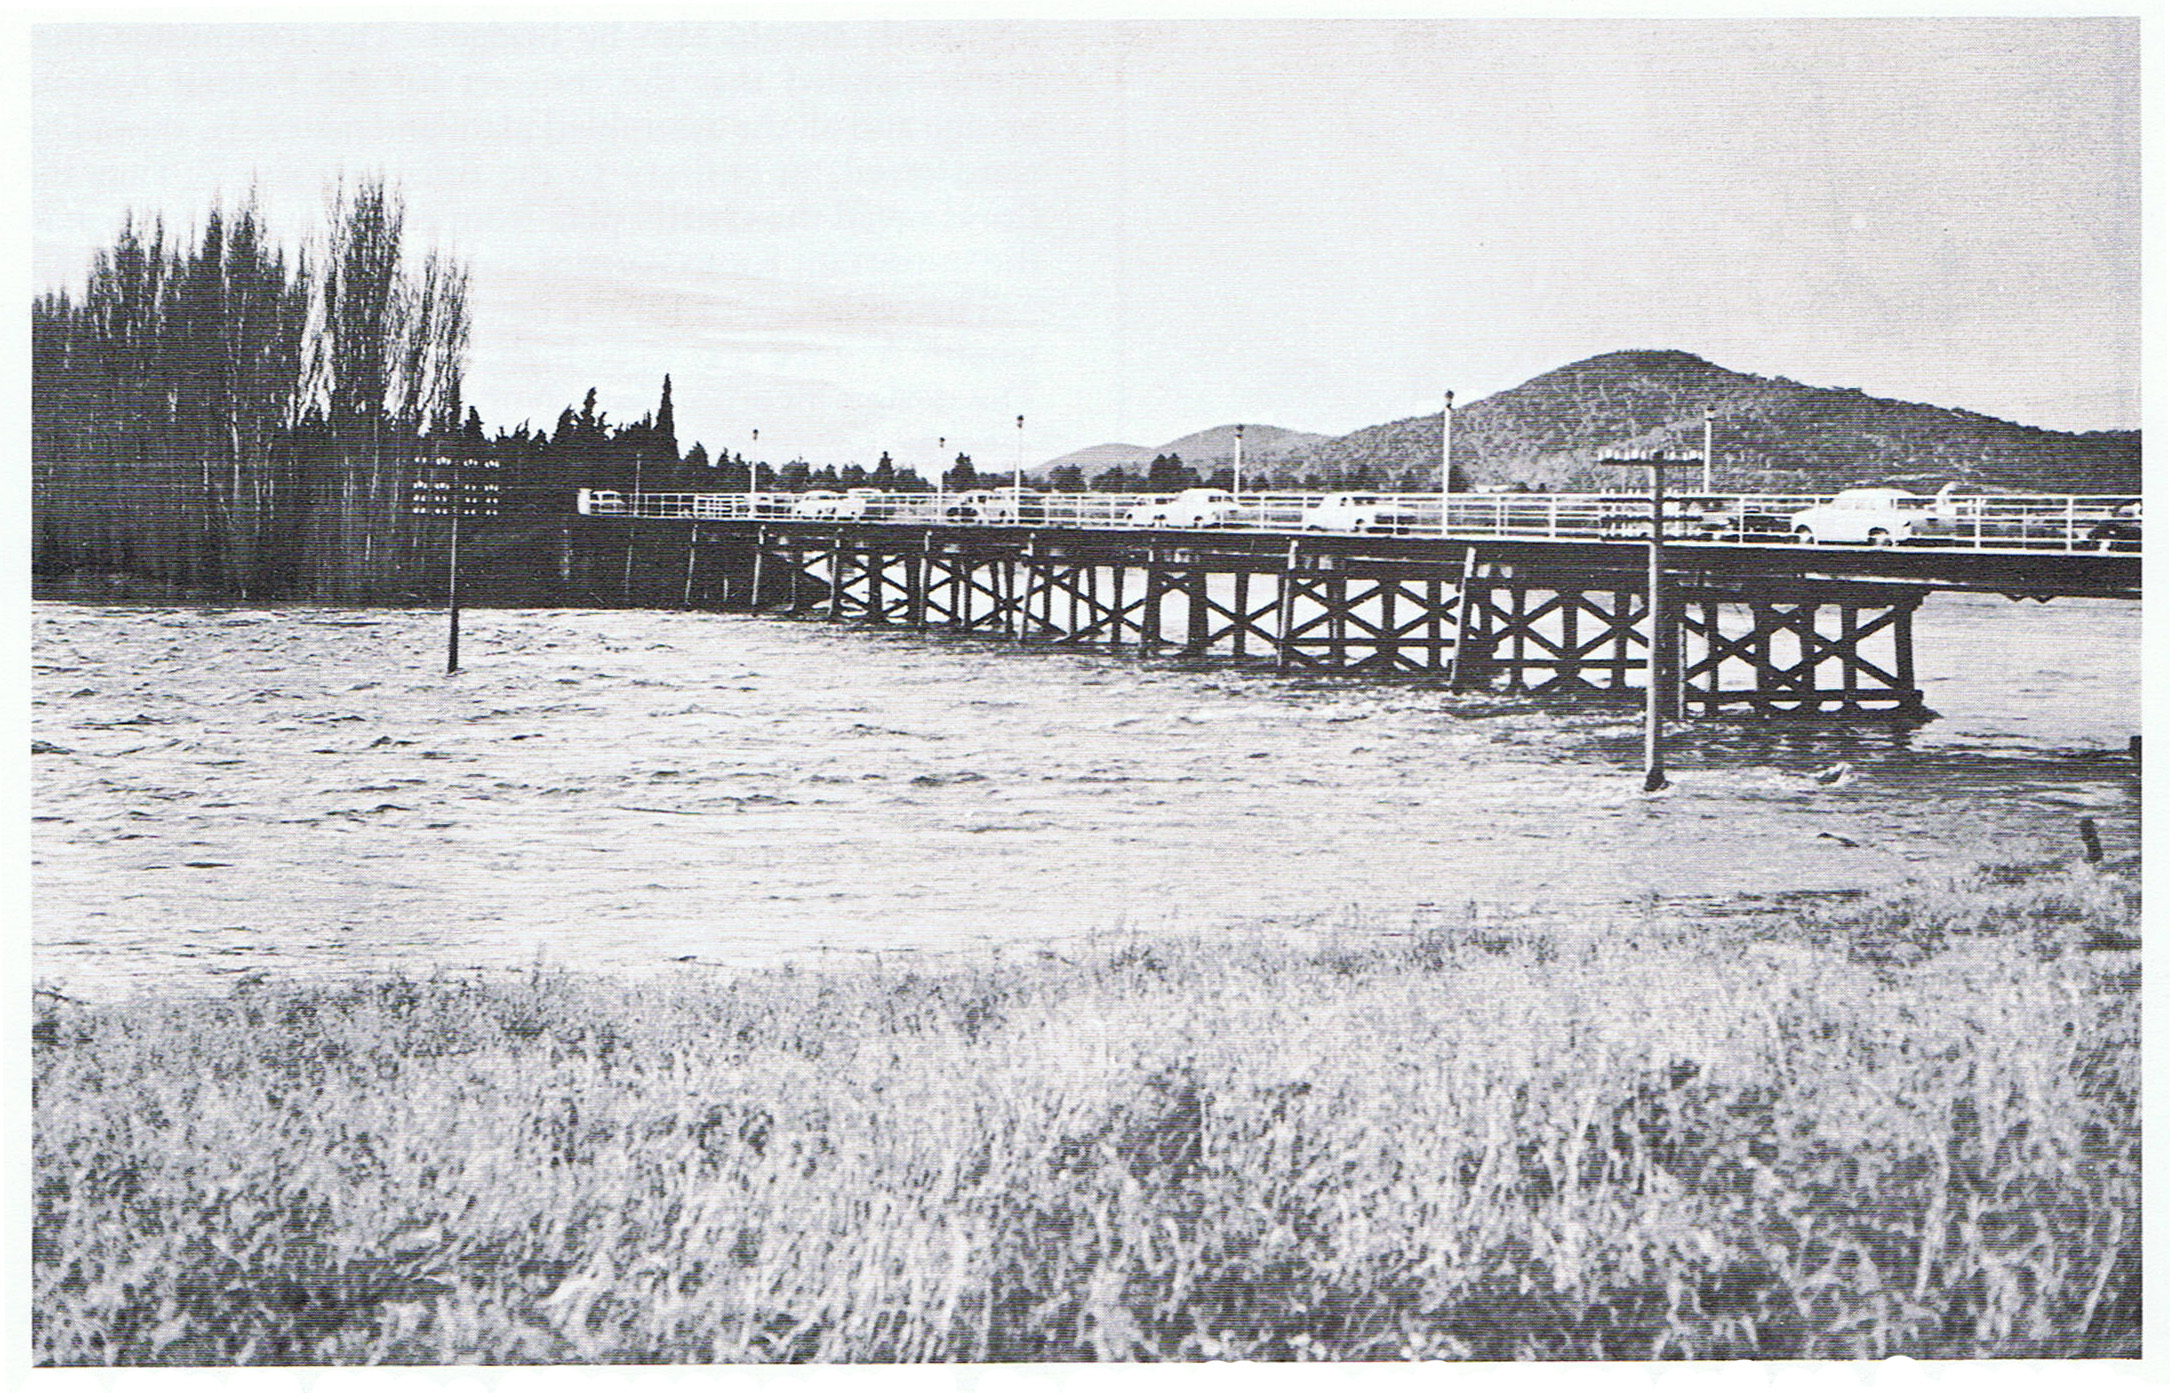 The Billabong Bridge